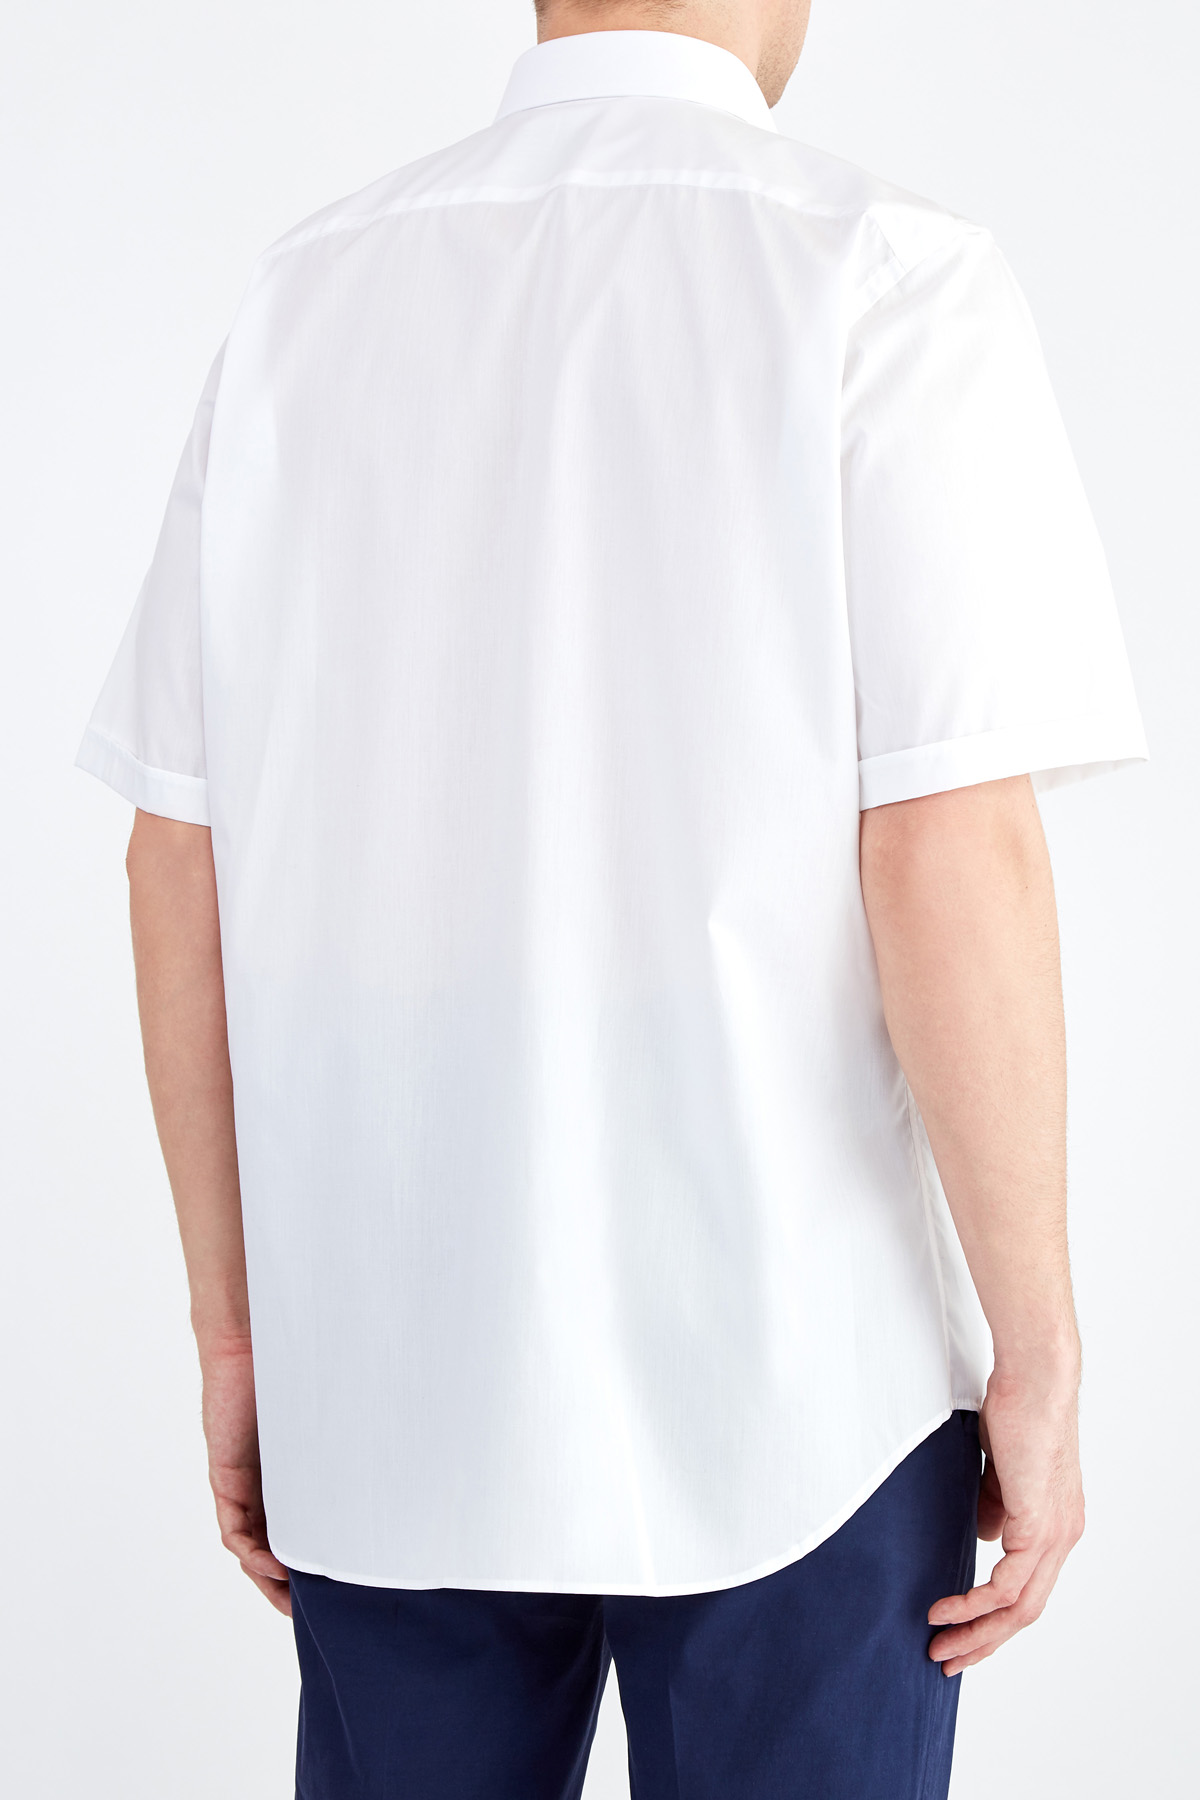 Базовая белая рубашка с коротким рукавом из поплина Impeccabile CANALI, цвет белый, размер 58;60 - фото 4